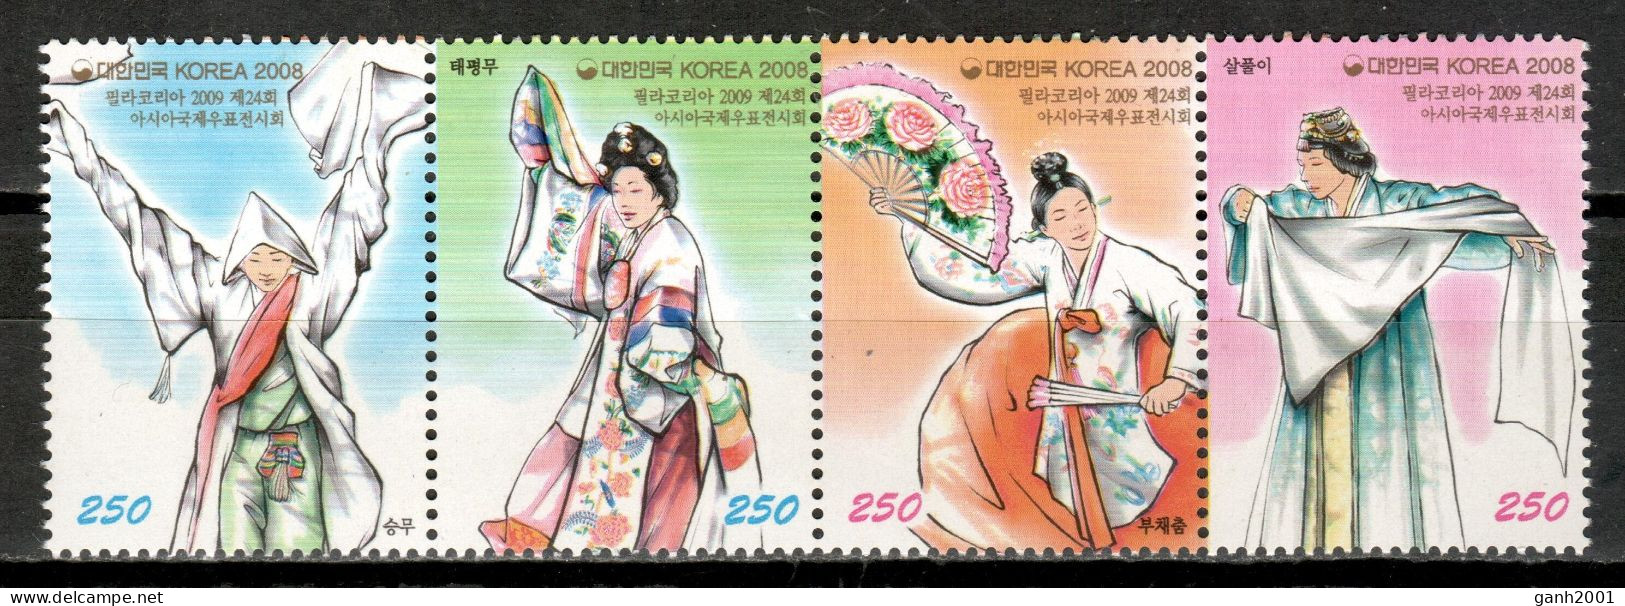 Korea South 2008 Corea  / Traditional Dances Folk MNH Bailes Tradicionales Folklore / Cu16506  10-17 - Dance